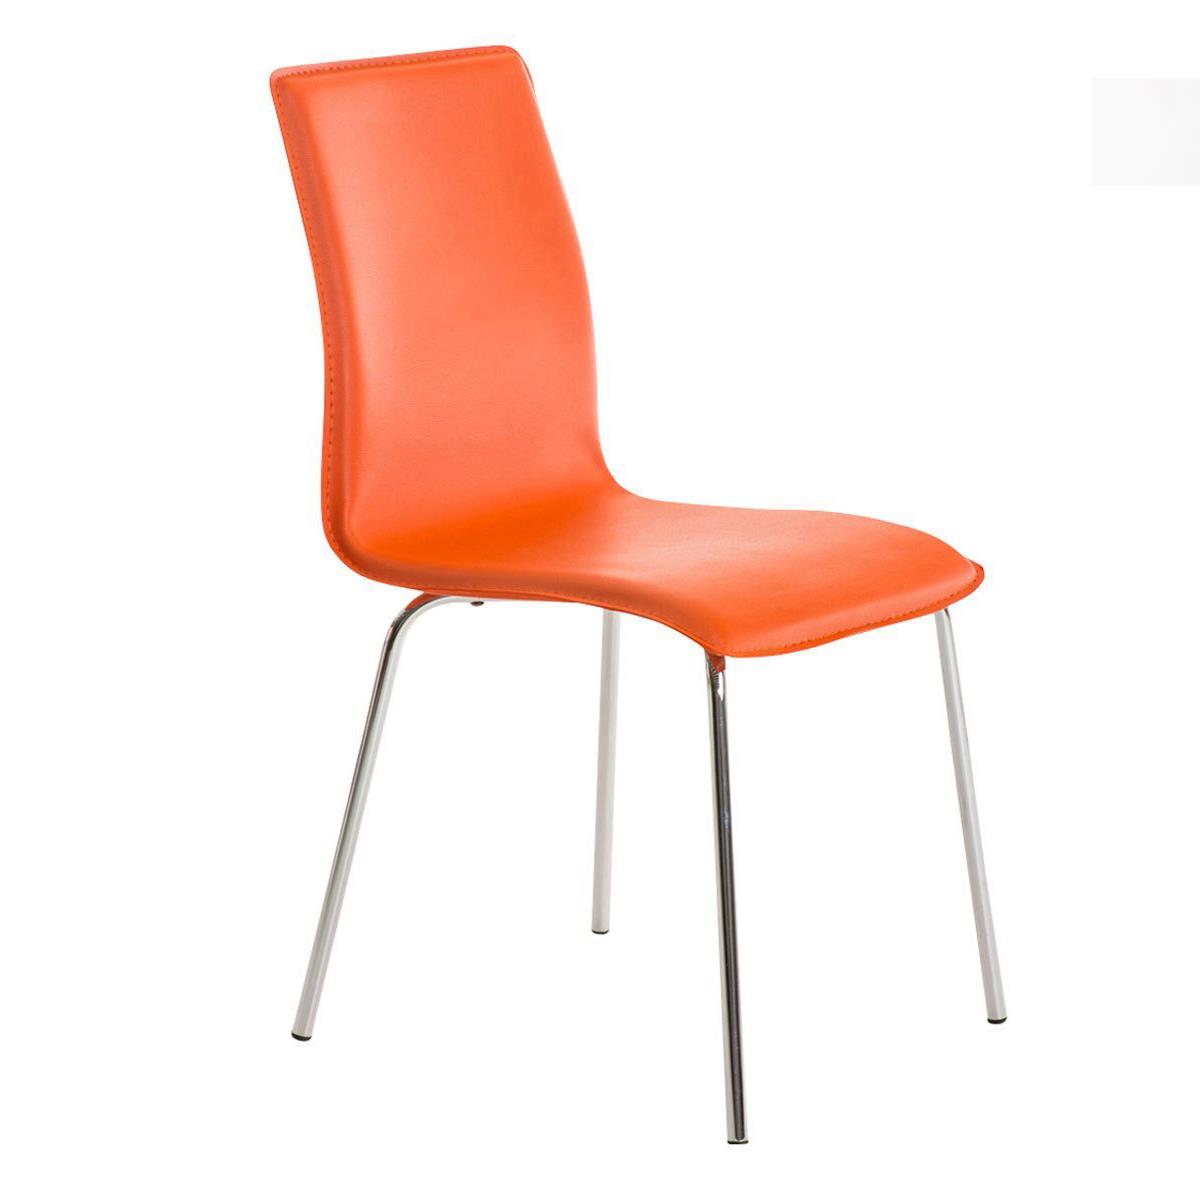 Cadeira de Visita MIKI, Design Exclusivo, Forrada Em Pele, Cor Laranja